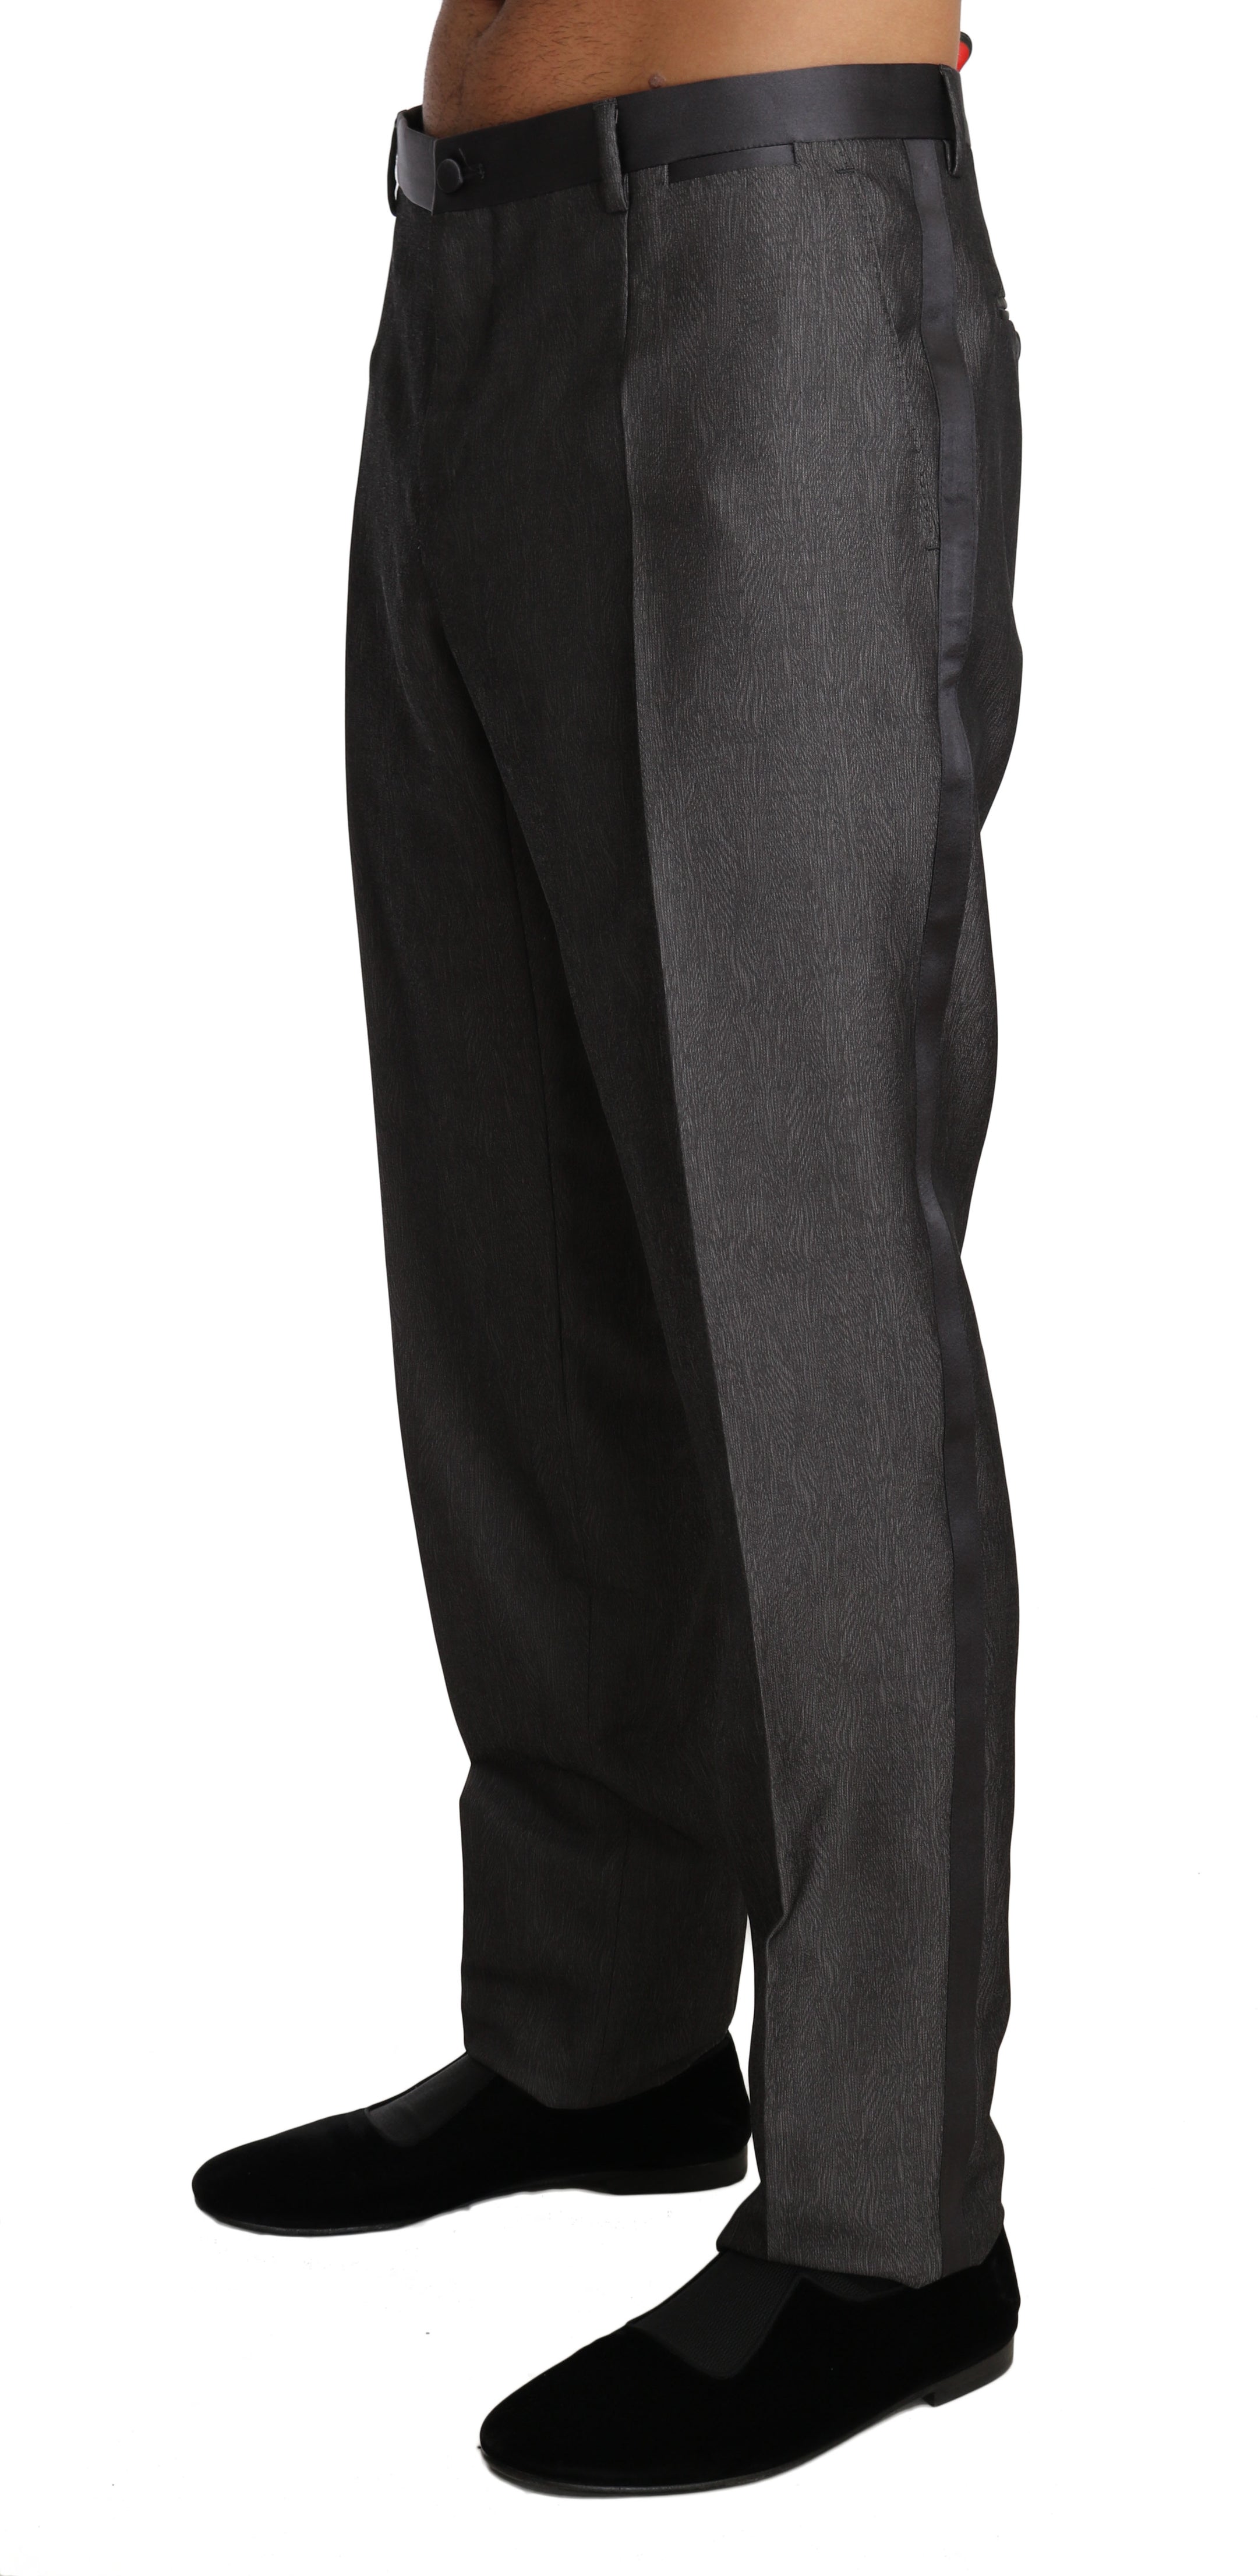 Elegant Patterned Gray Wool Blend Trousers